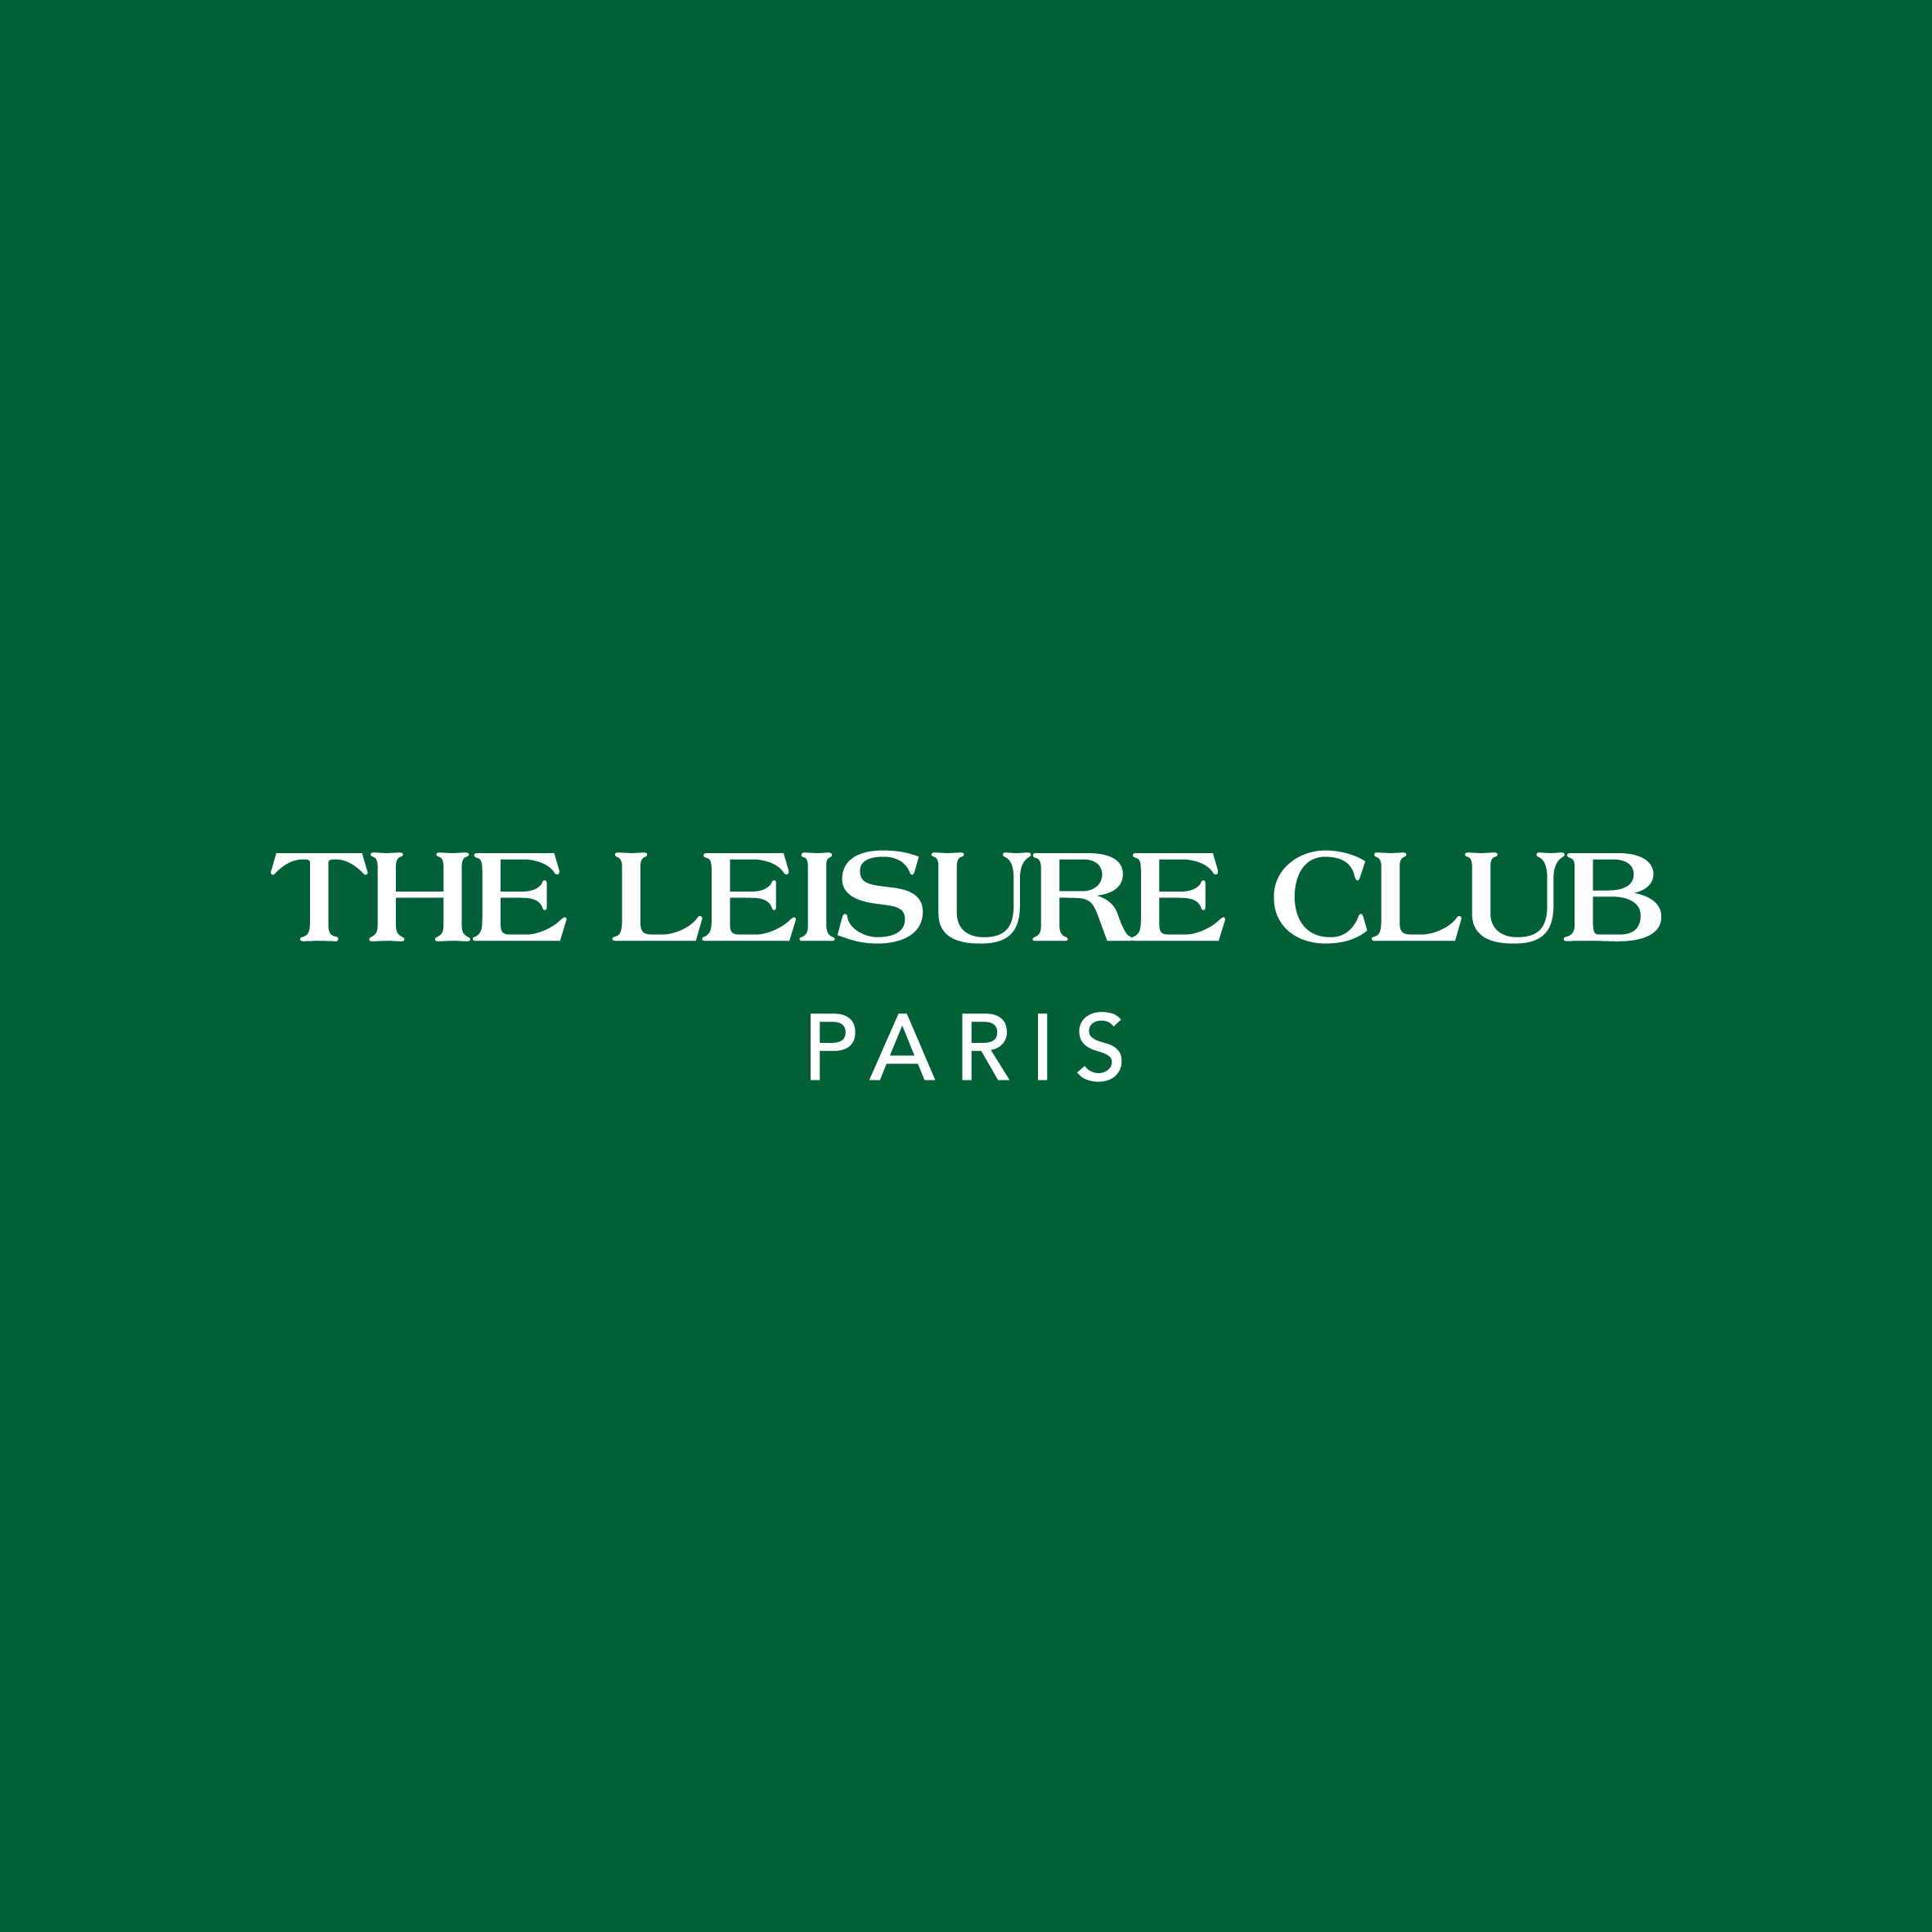 THE LEISURE CLUB